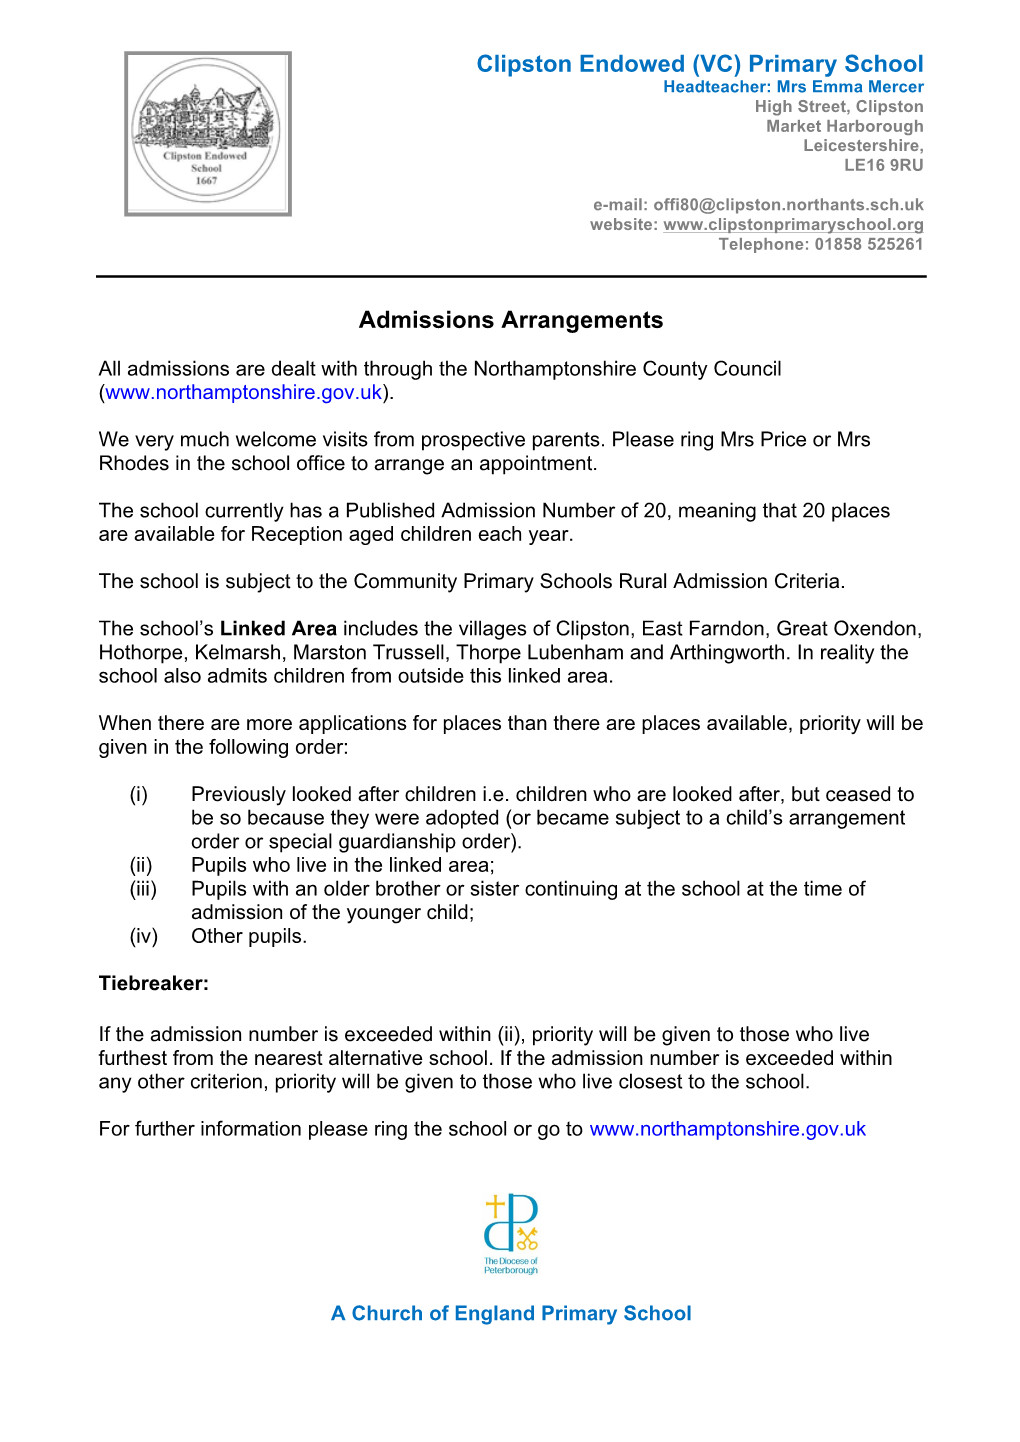 Clipston Endowed (VC) Primary School Admissions Arrangements